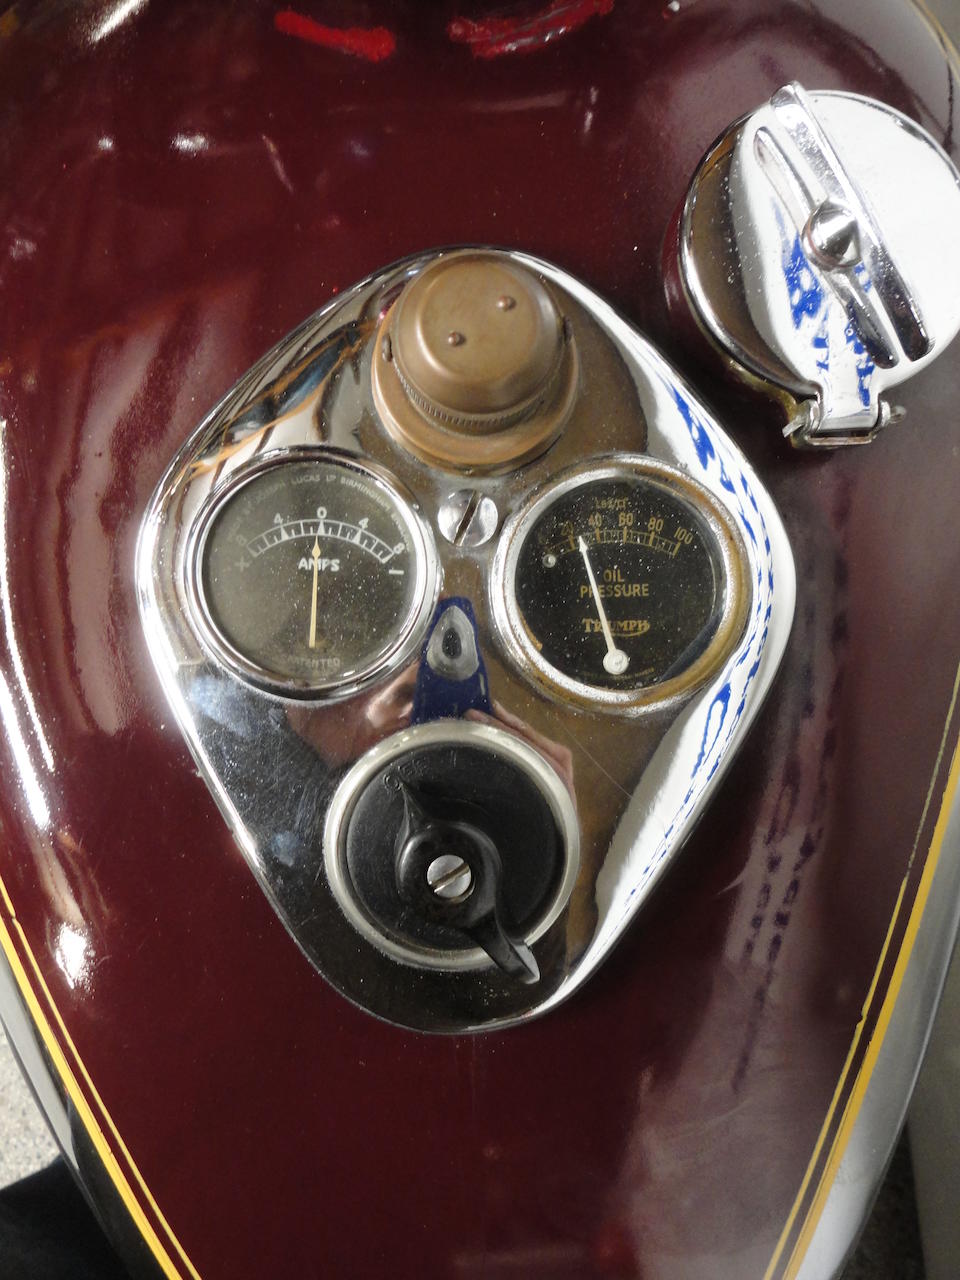 The ex-Steve McQueen, 1938 Triumph 500cc 5T Speed Twin Frame no. T.H.5838 Engine no. 13084